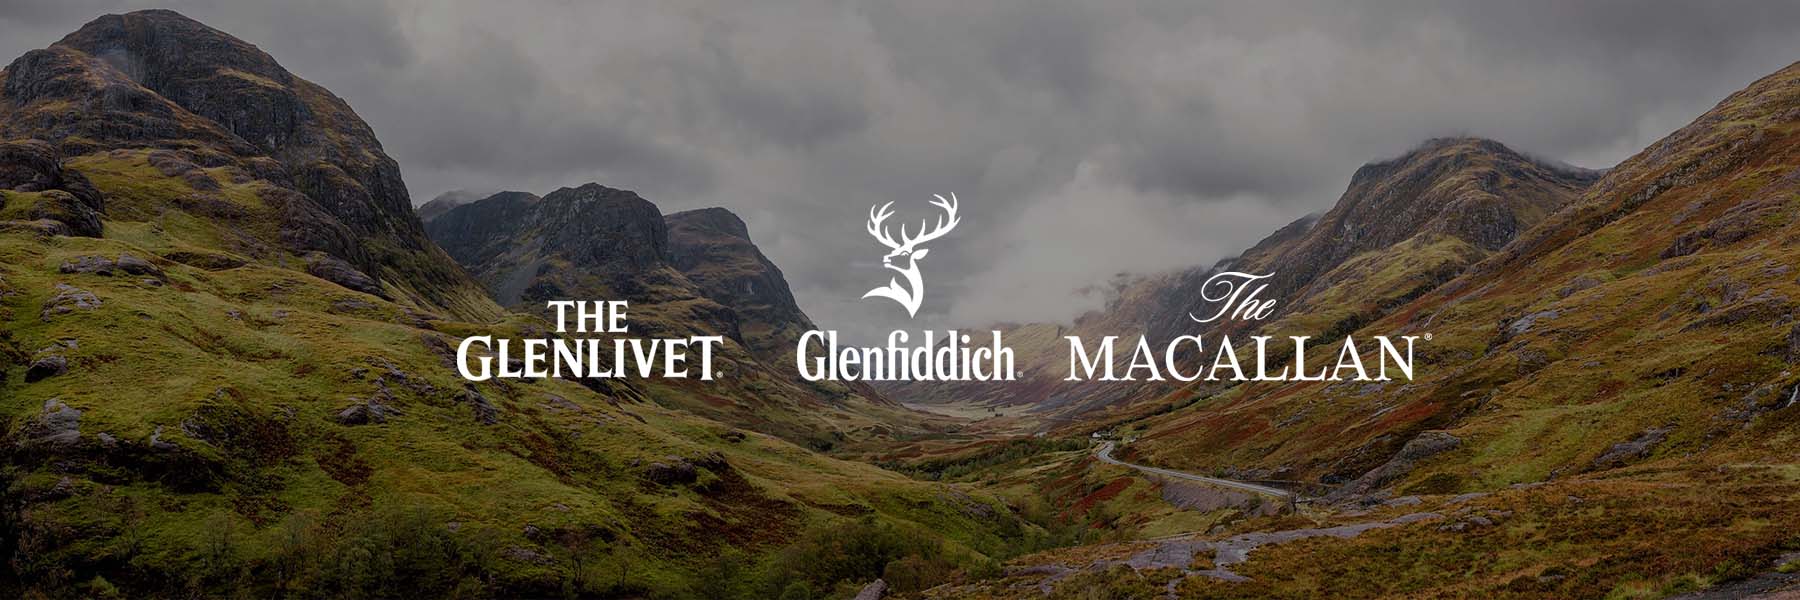 Glenlivet vs Glenfiddich vs Macallan